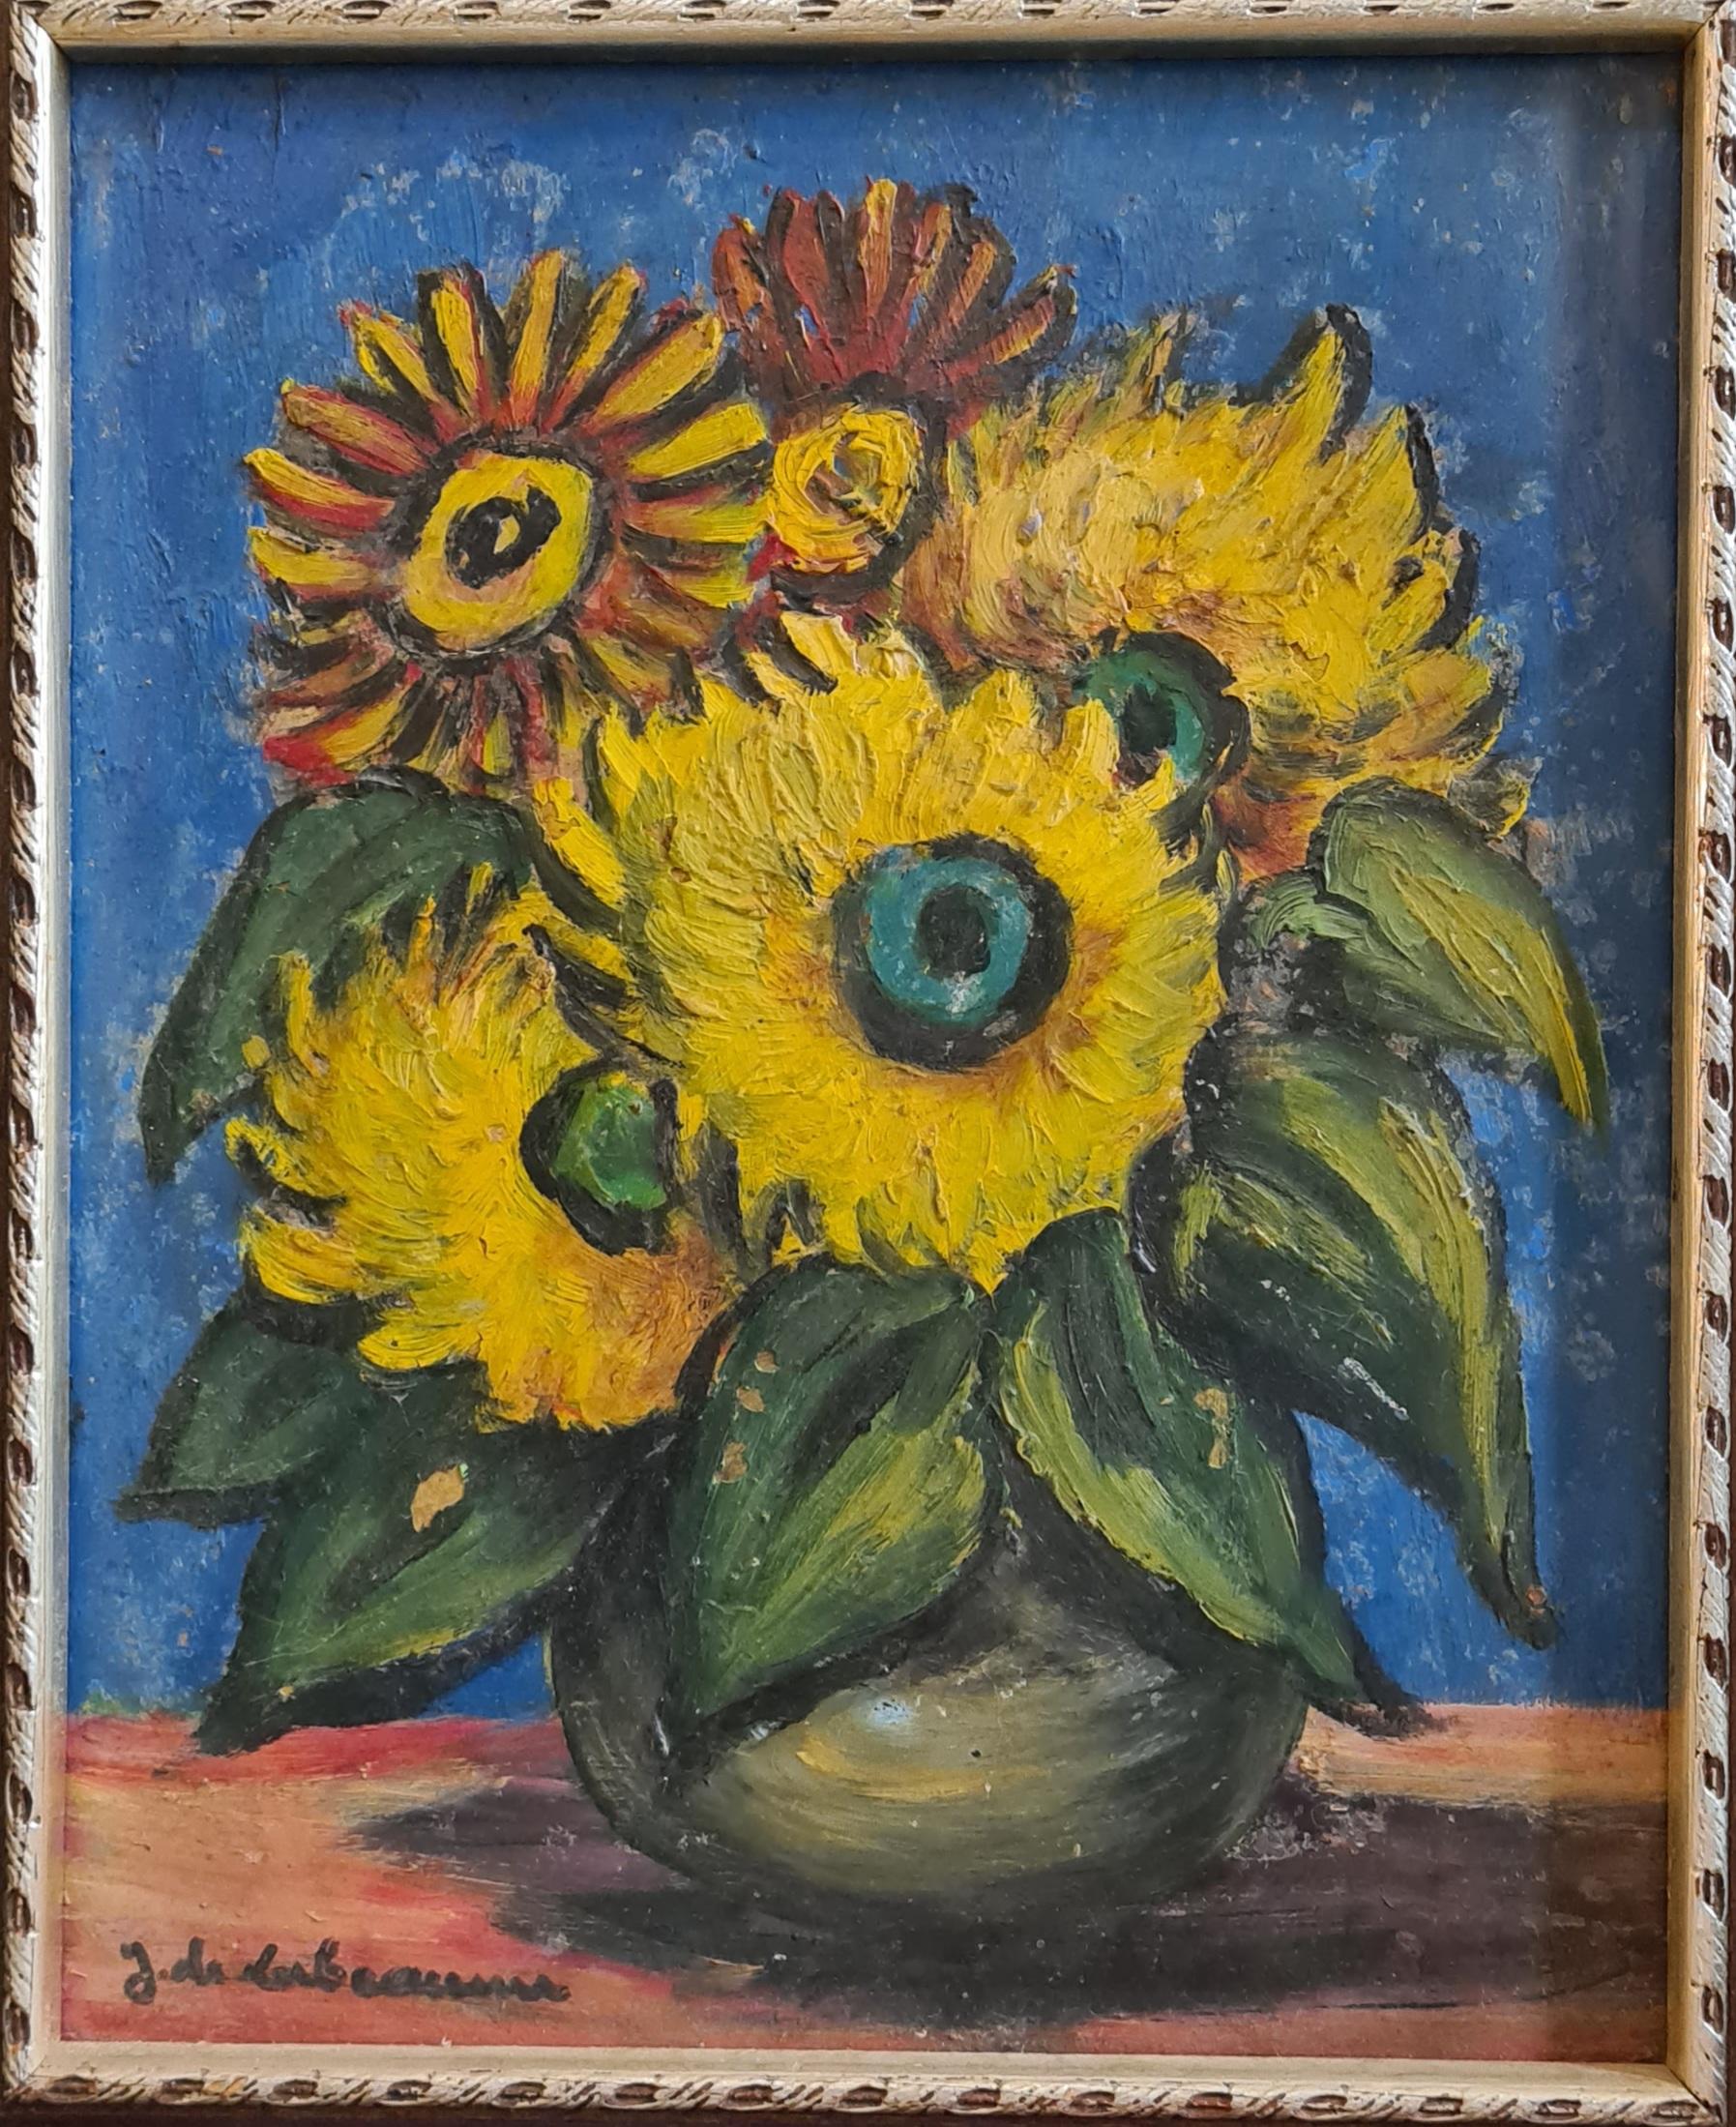 Jeanne De Labeaume Still-Life Painting - Sunflowers. 'Bateau-Lavoir' Movement Oil on Board, Hommage to Van Gogh.